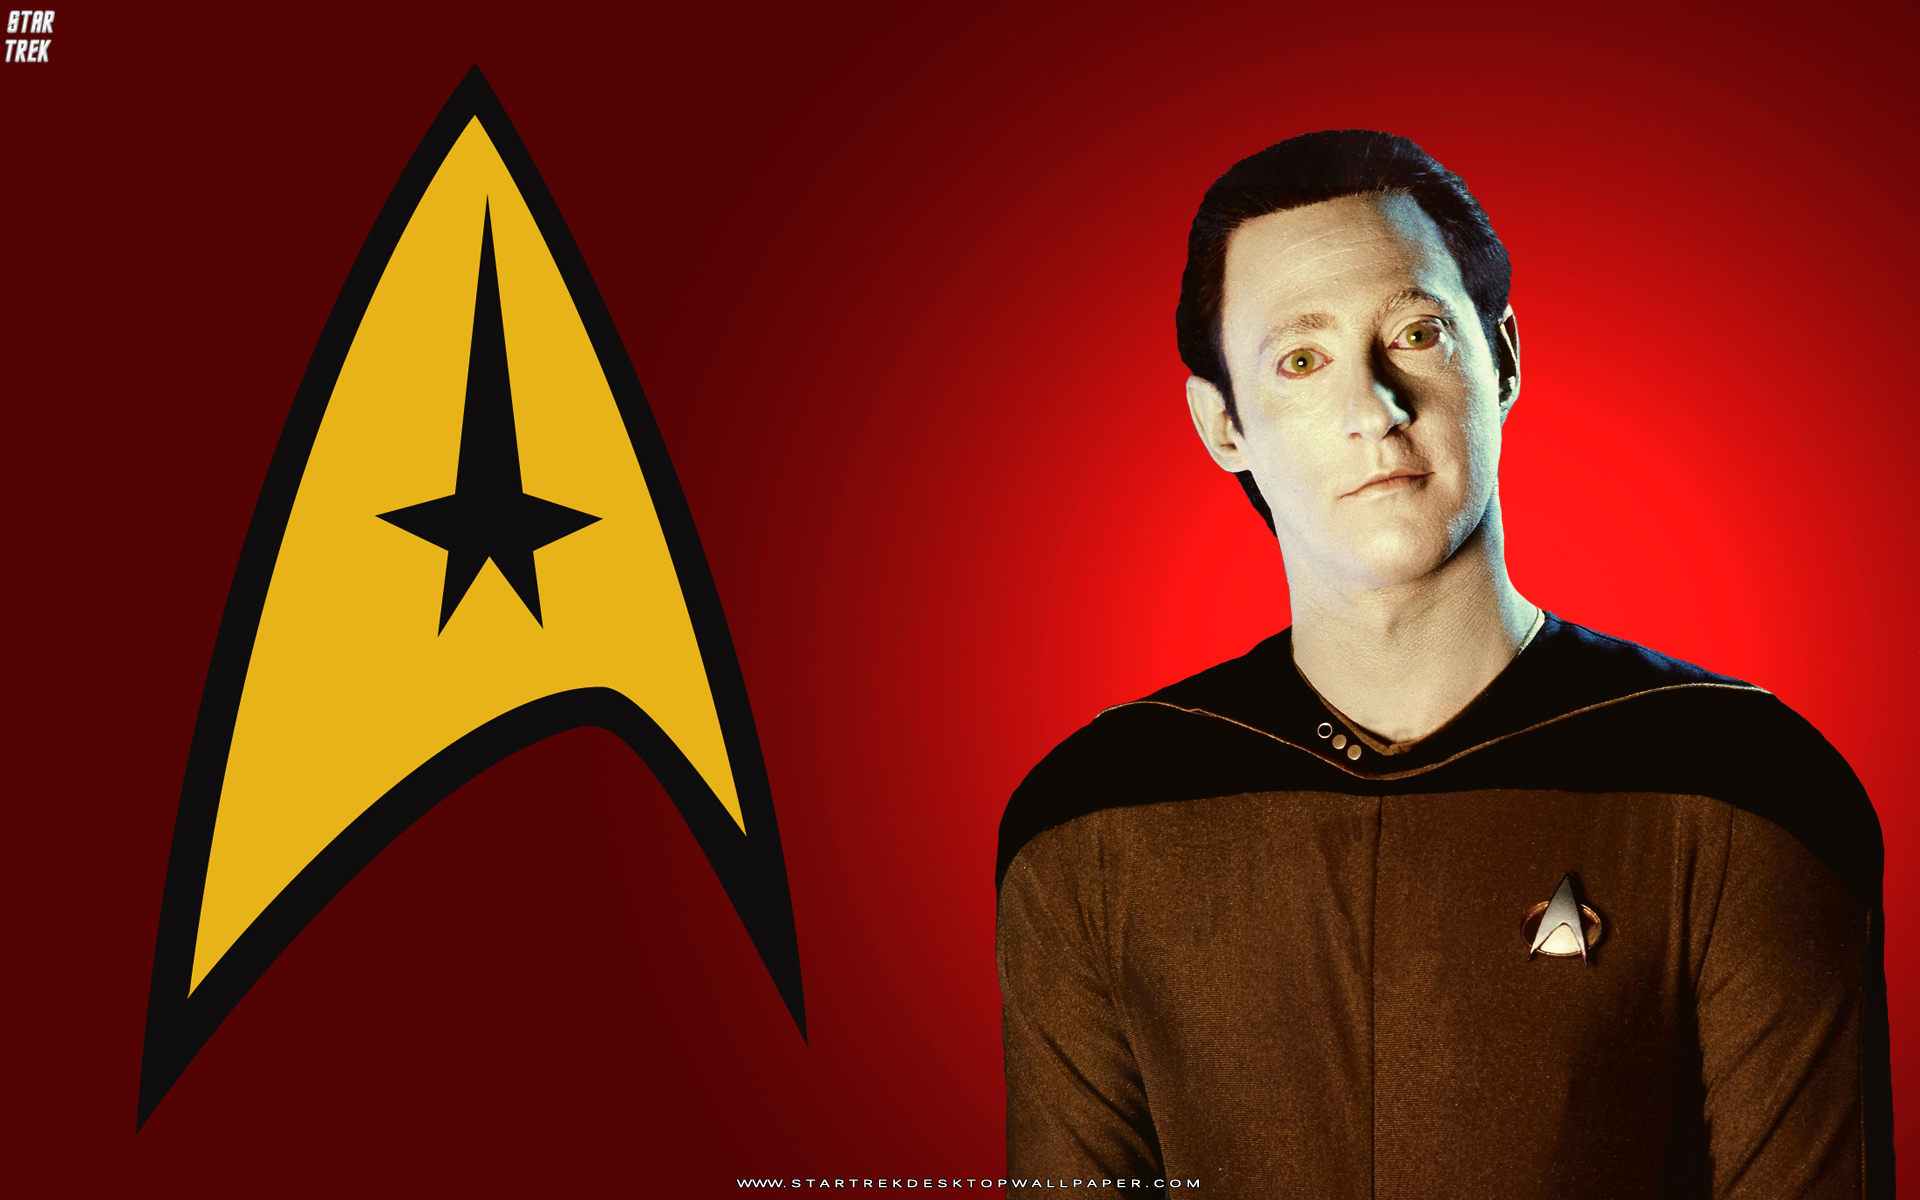 - Star Trek Lieutenant Commander Data - free Star Trek computer desktop wallpaper, pictures, images.